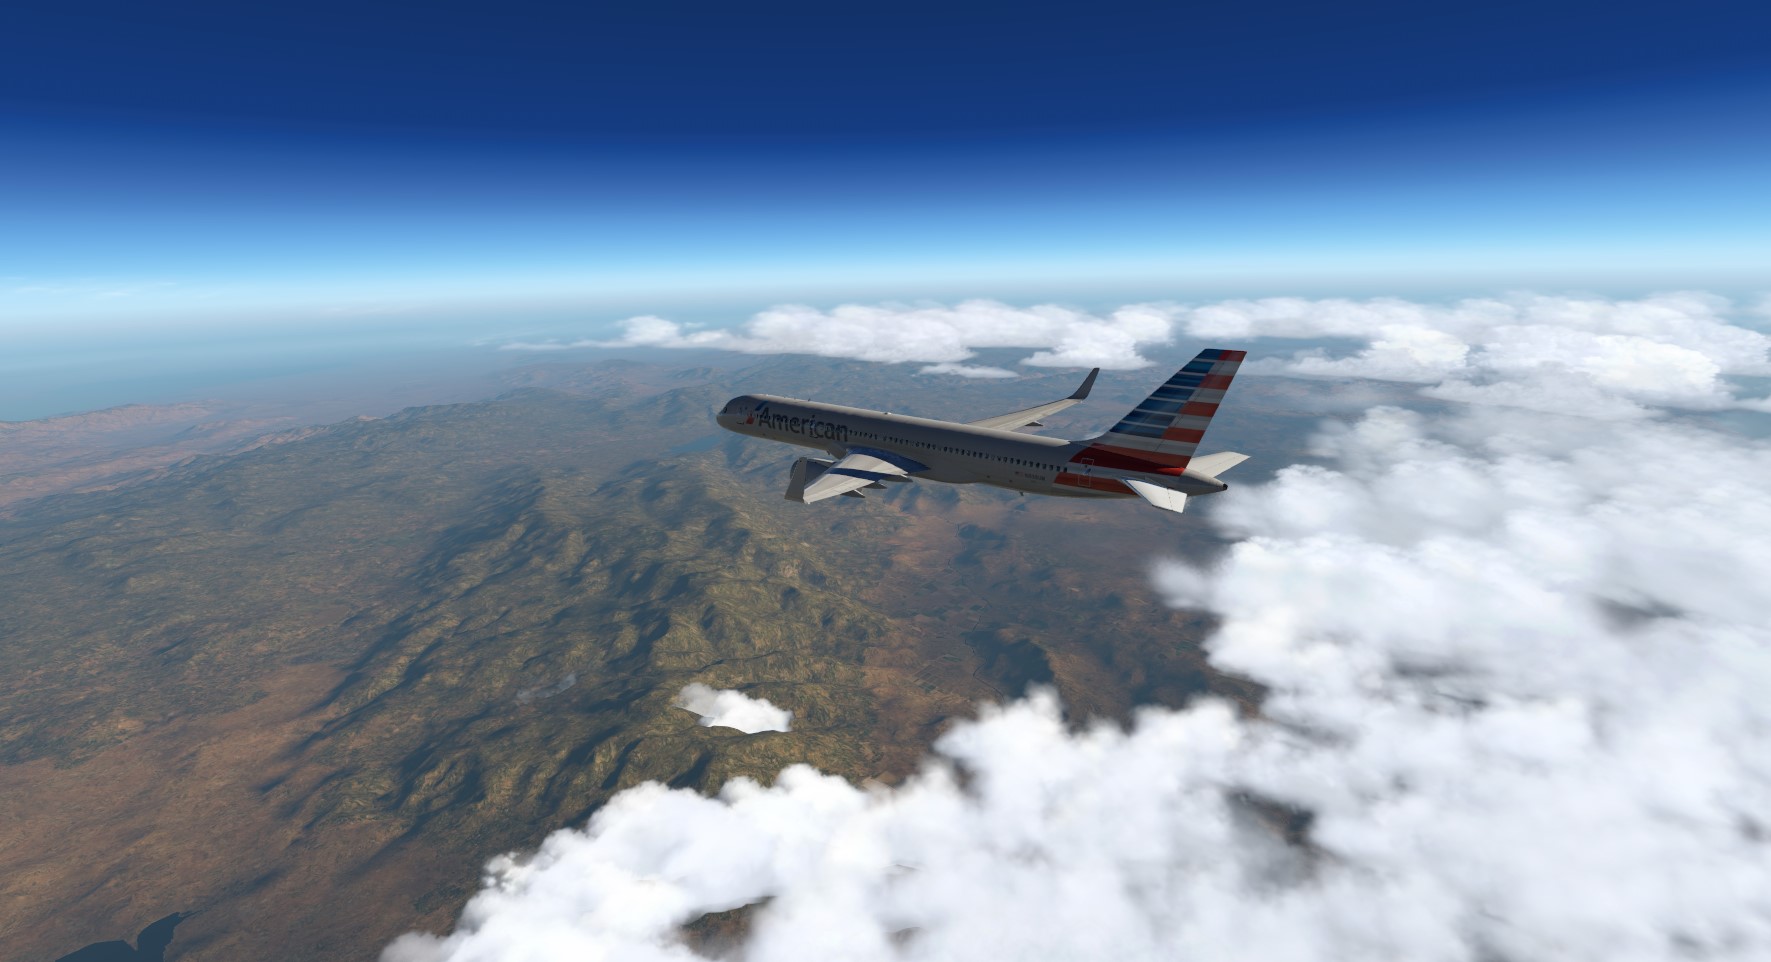 Over the Sierra Nevadas